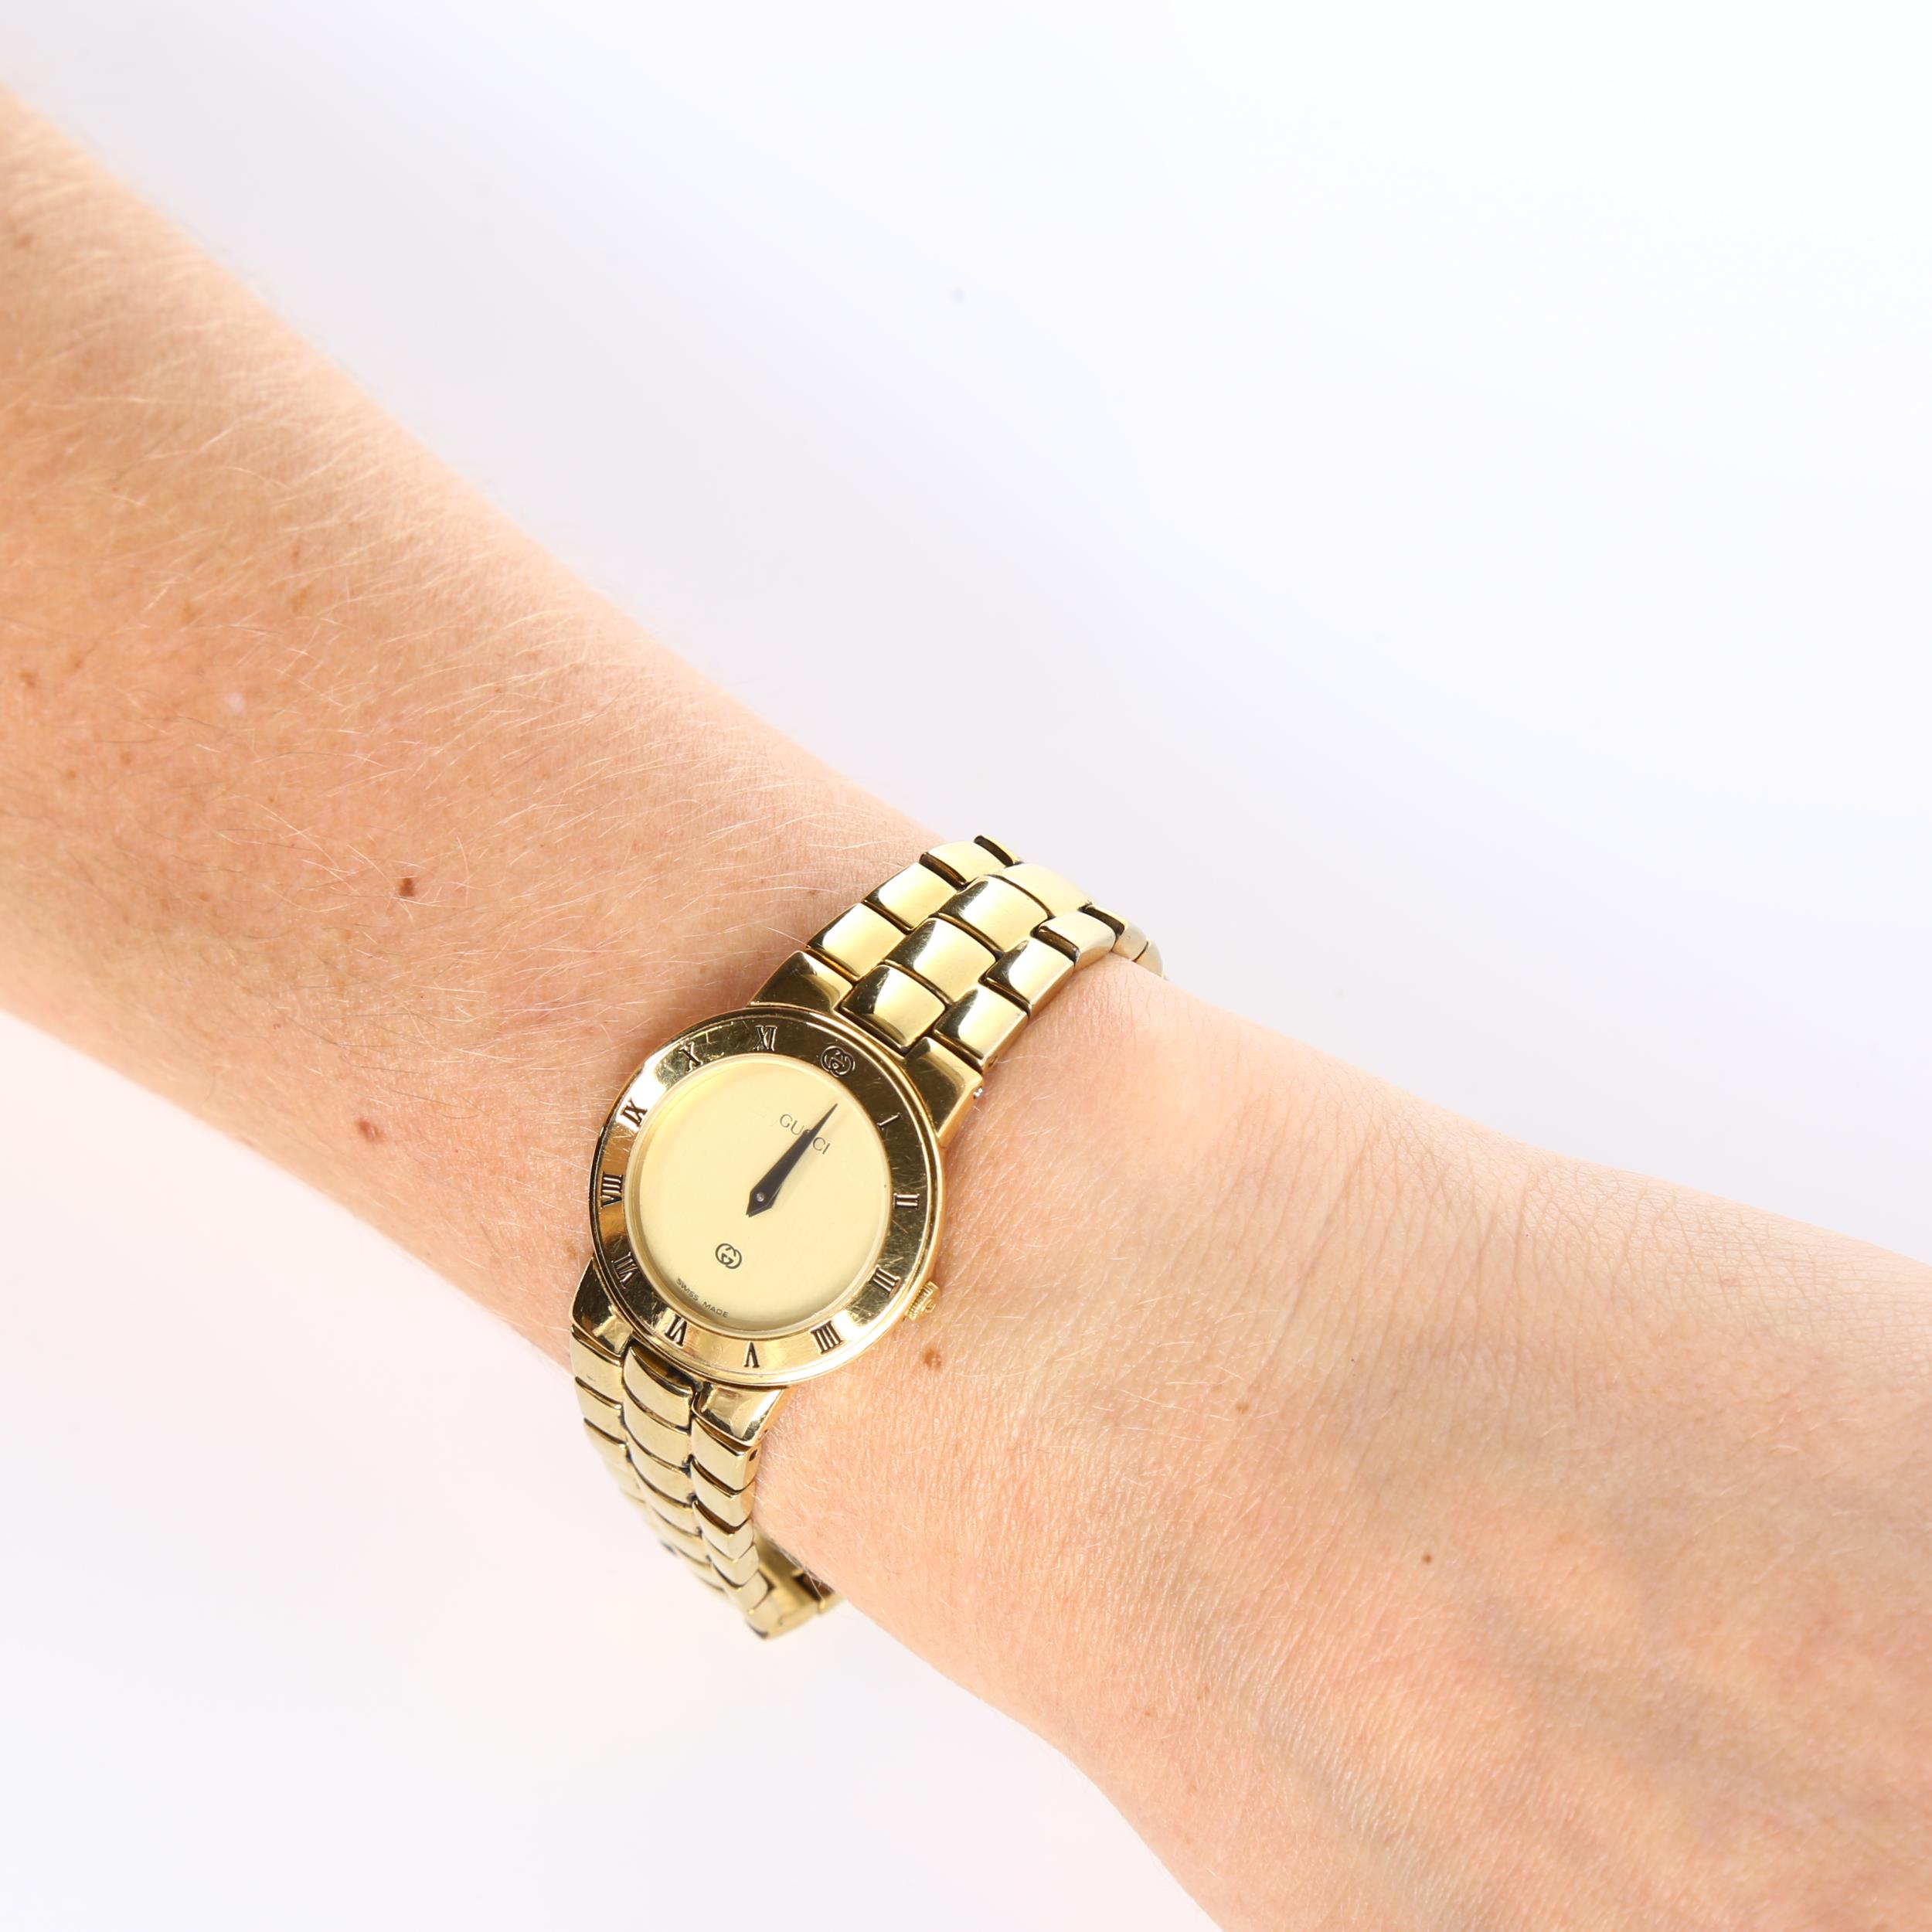 GUCCI - a lady's gold plated 3300L quartz bracelet watch, champagne dial with blue hands and Roman - Bild 5 aus 5